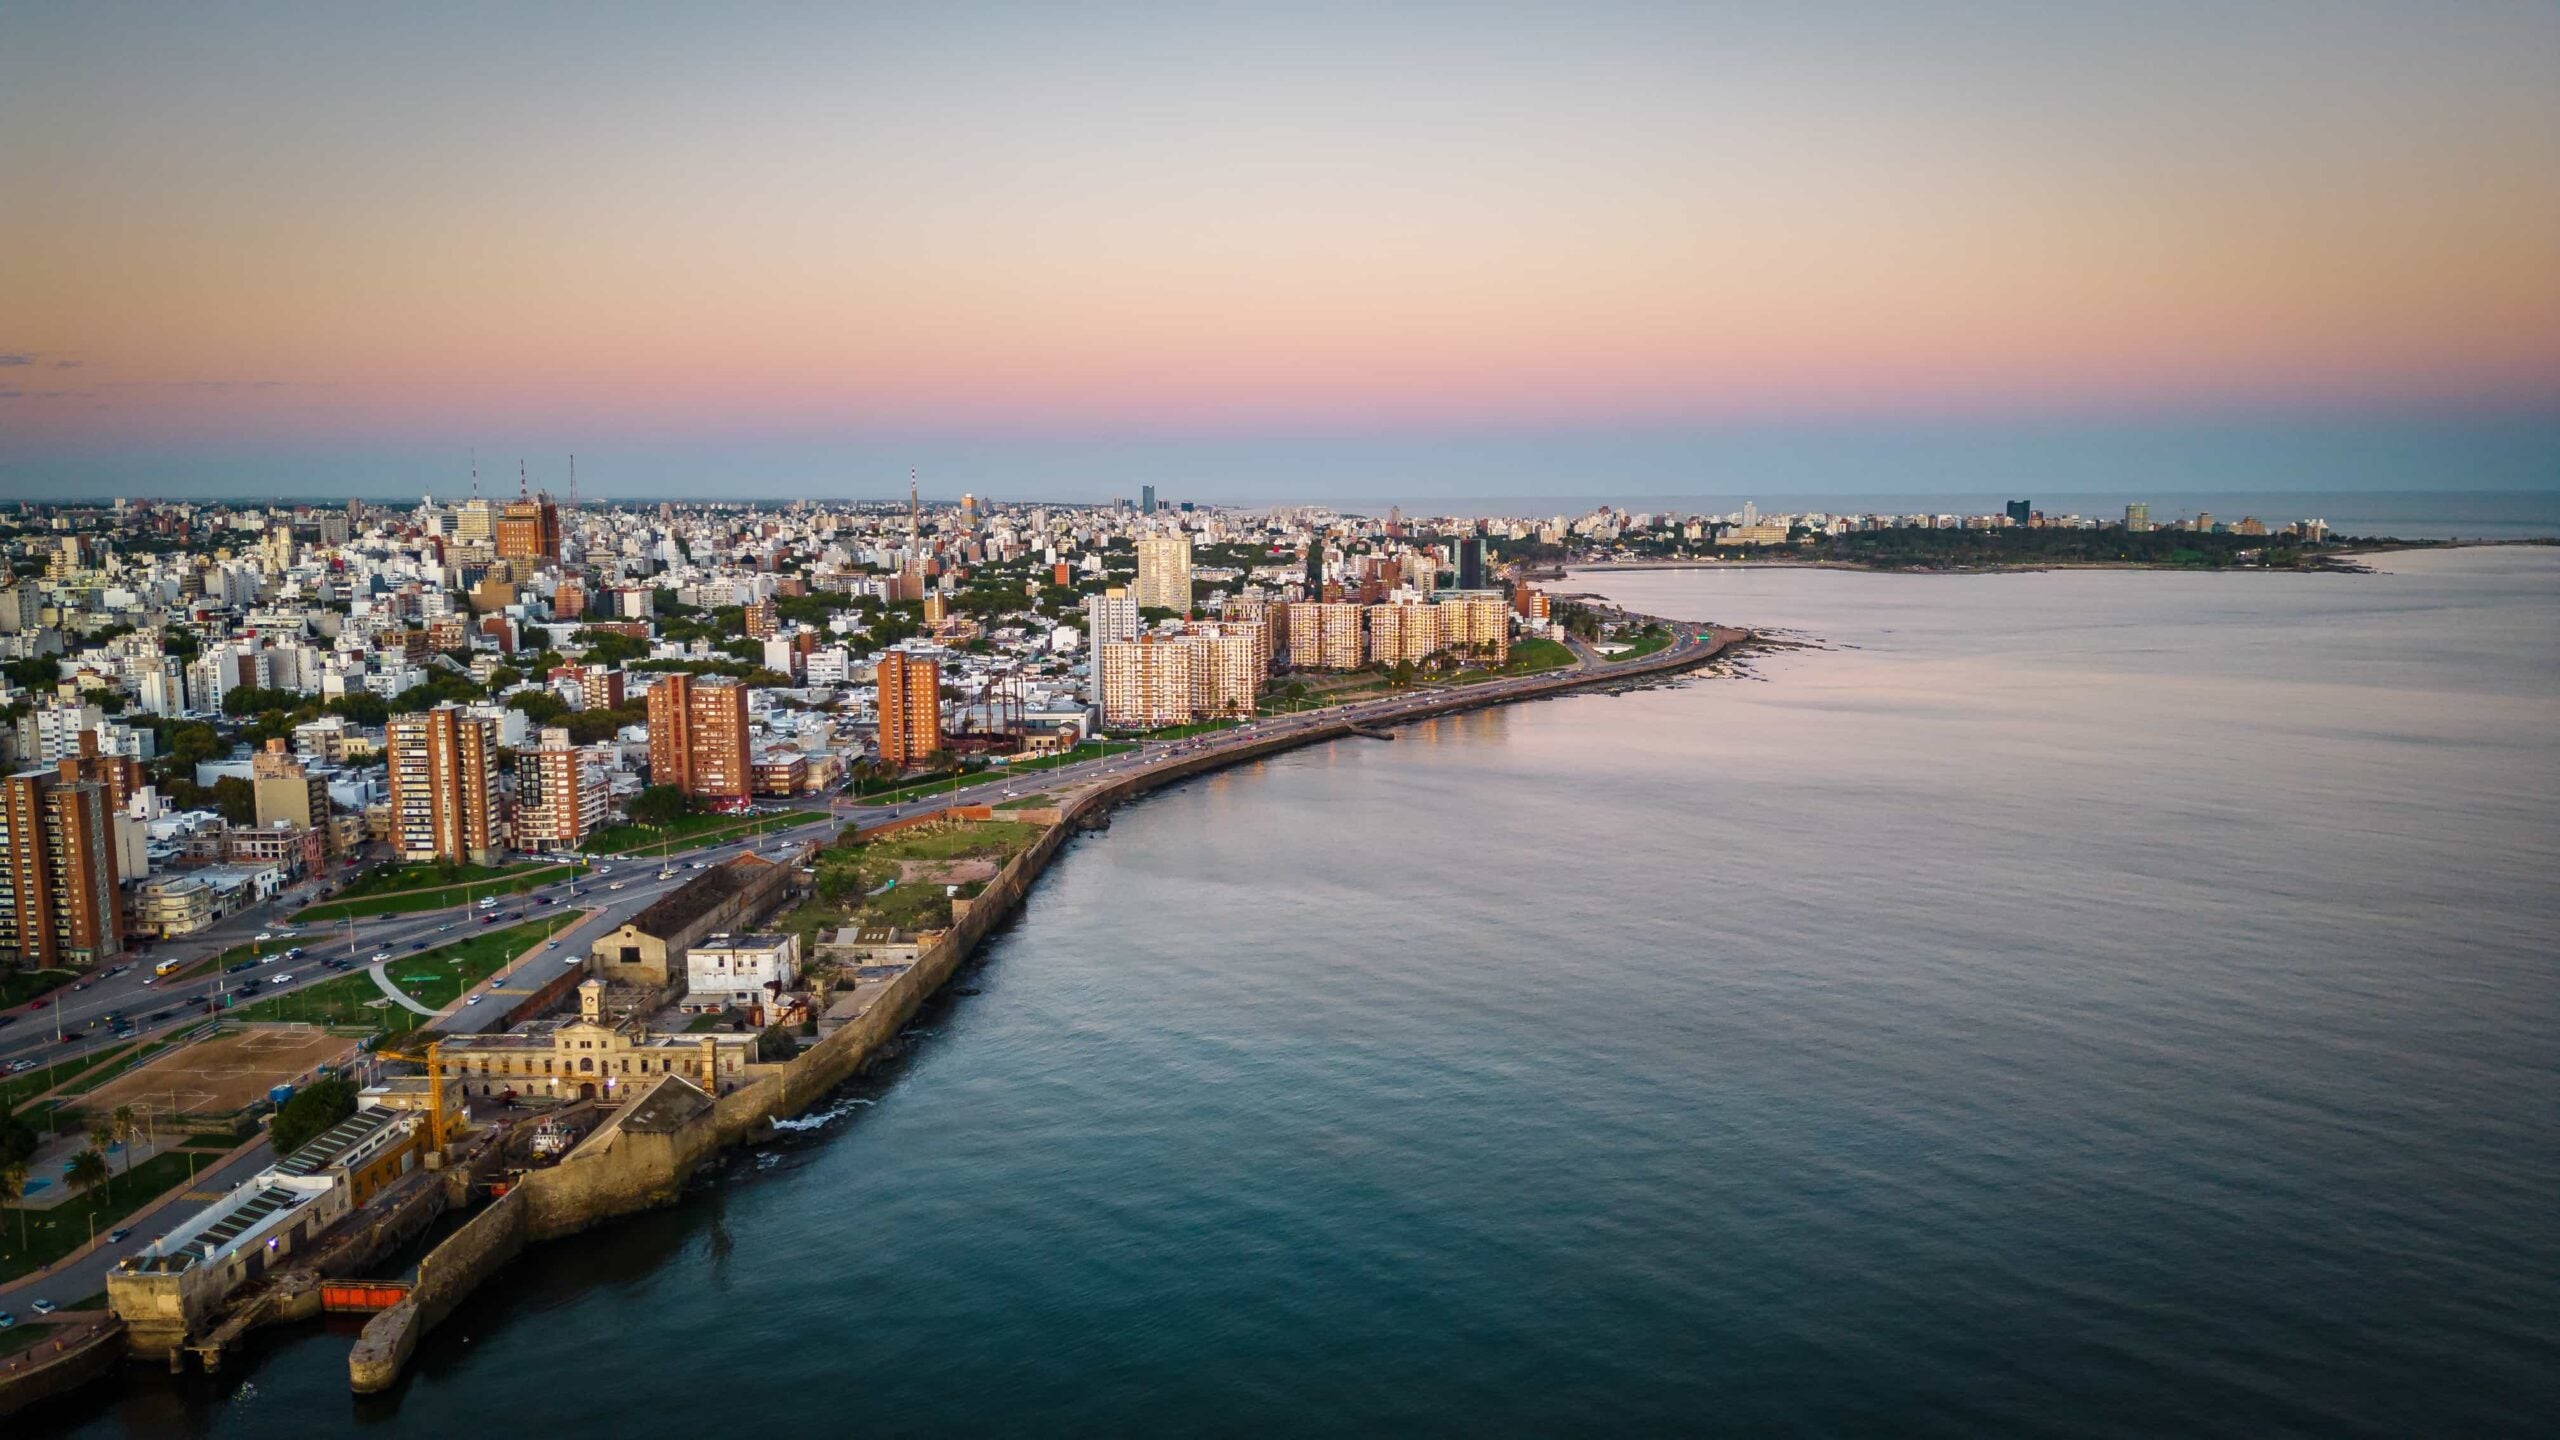 Montevidéu, capital do Uruguai